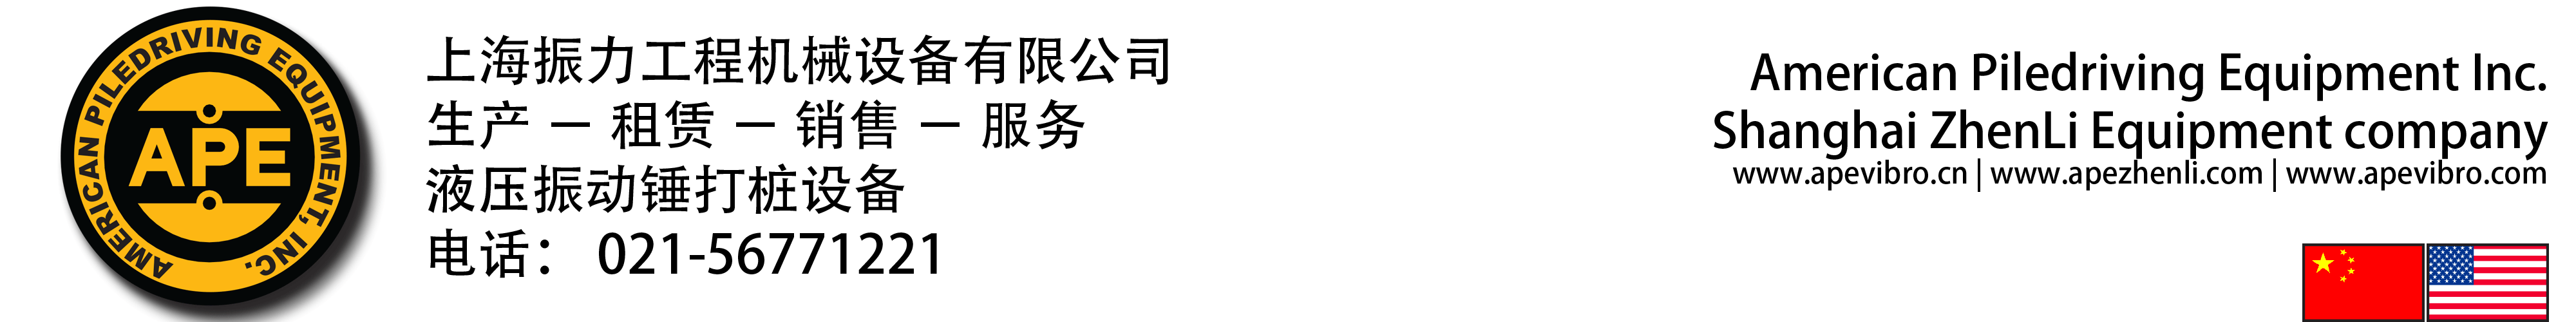 APE China Store Logo